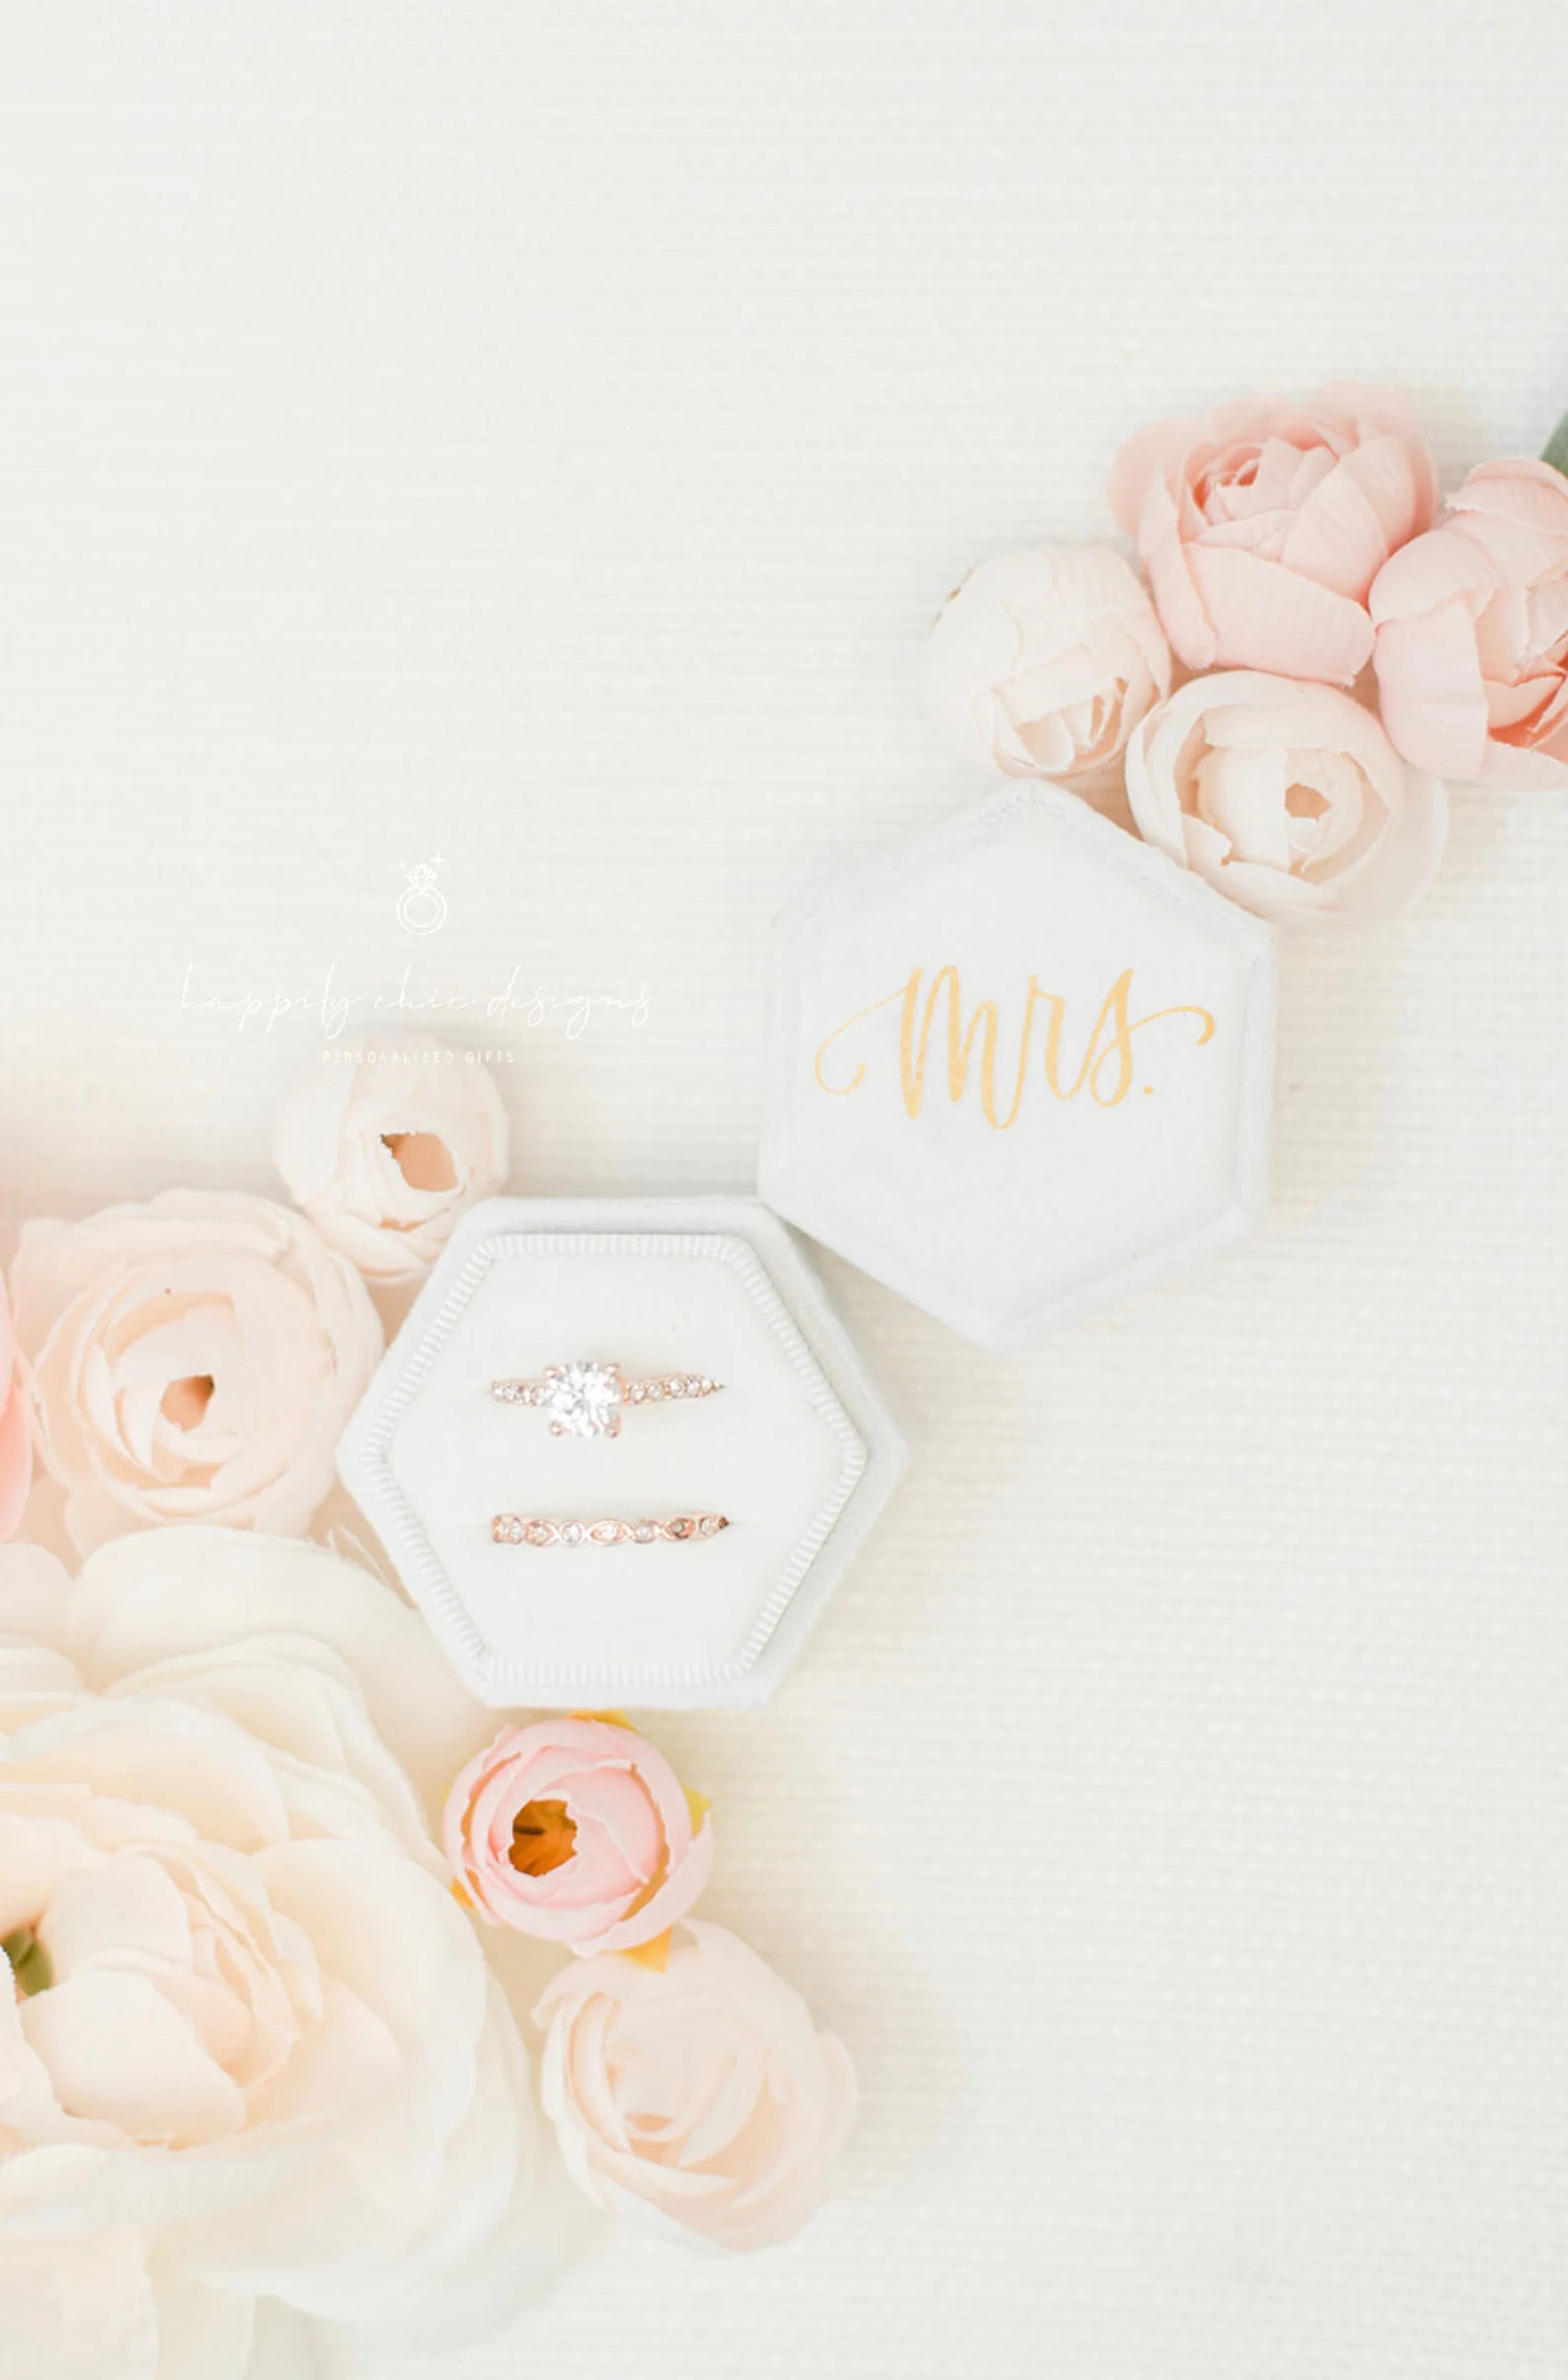 Velvet ring box - personalized initial wedding ring box- hexagon double slot modern ring box- engagement ring holder box gift for bride mrs